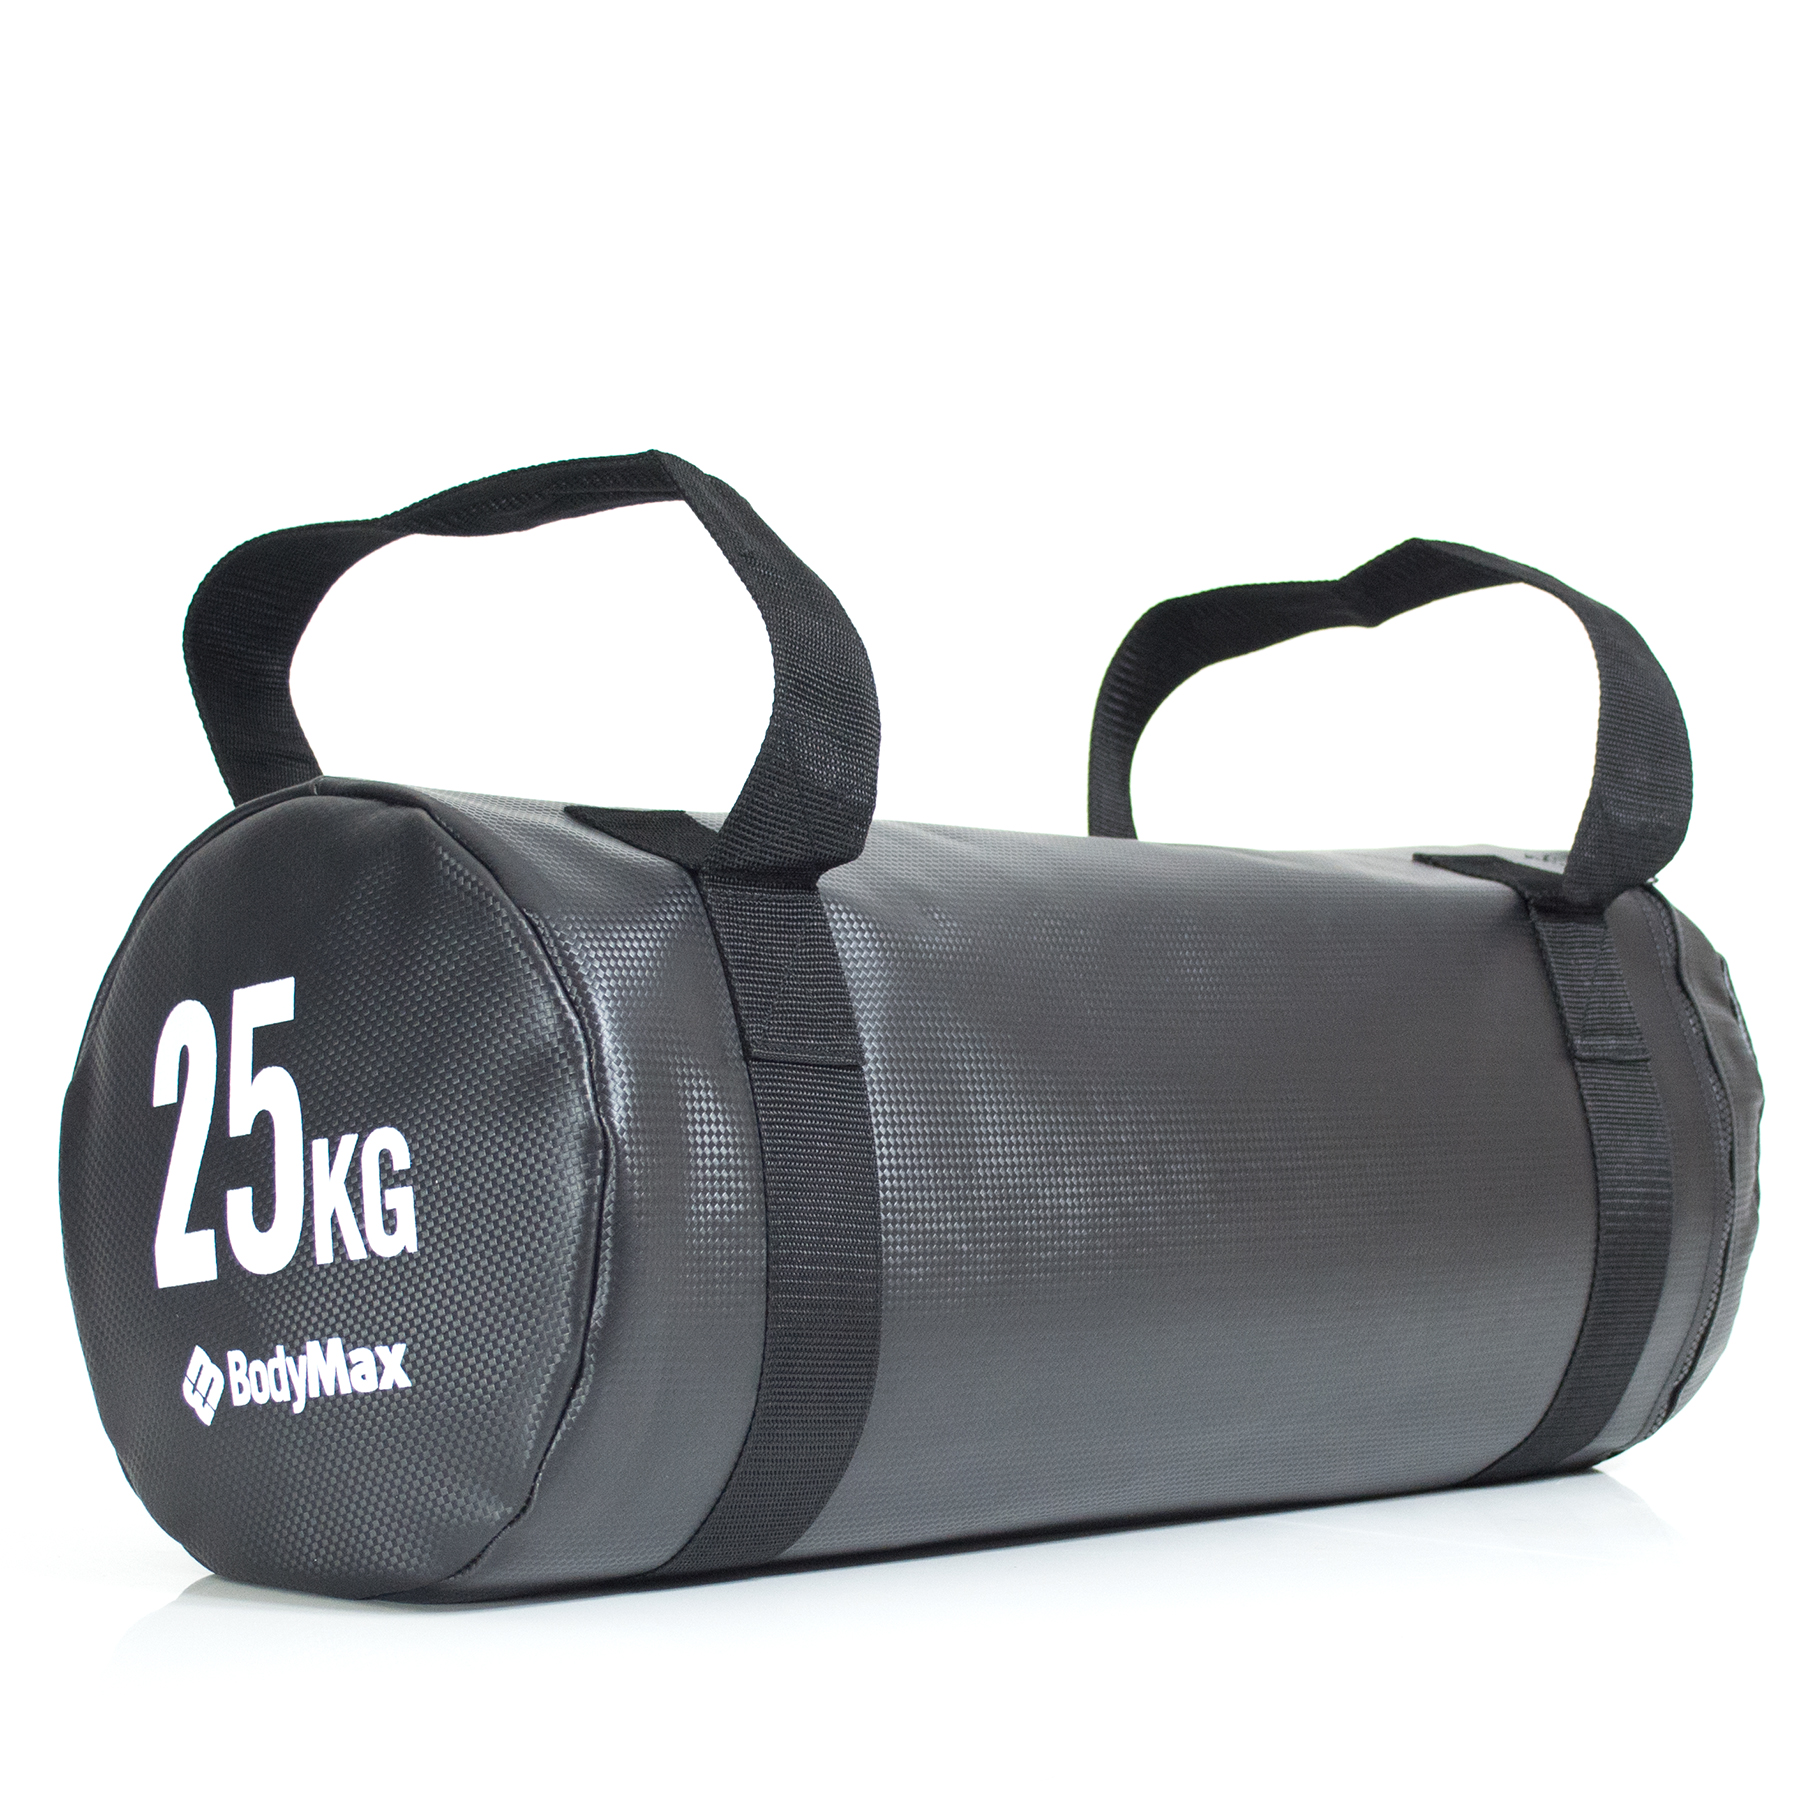 Bodymax 25kg Max Bag Sandbag • West Coast Fitness